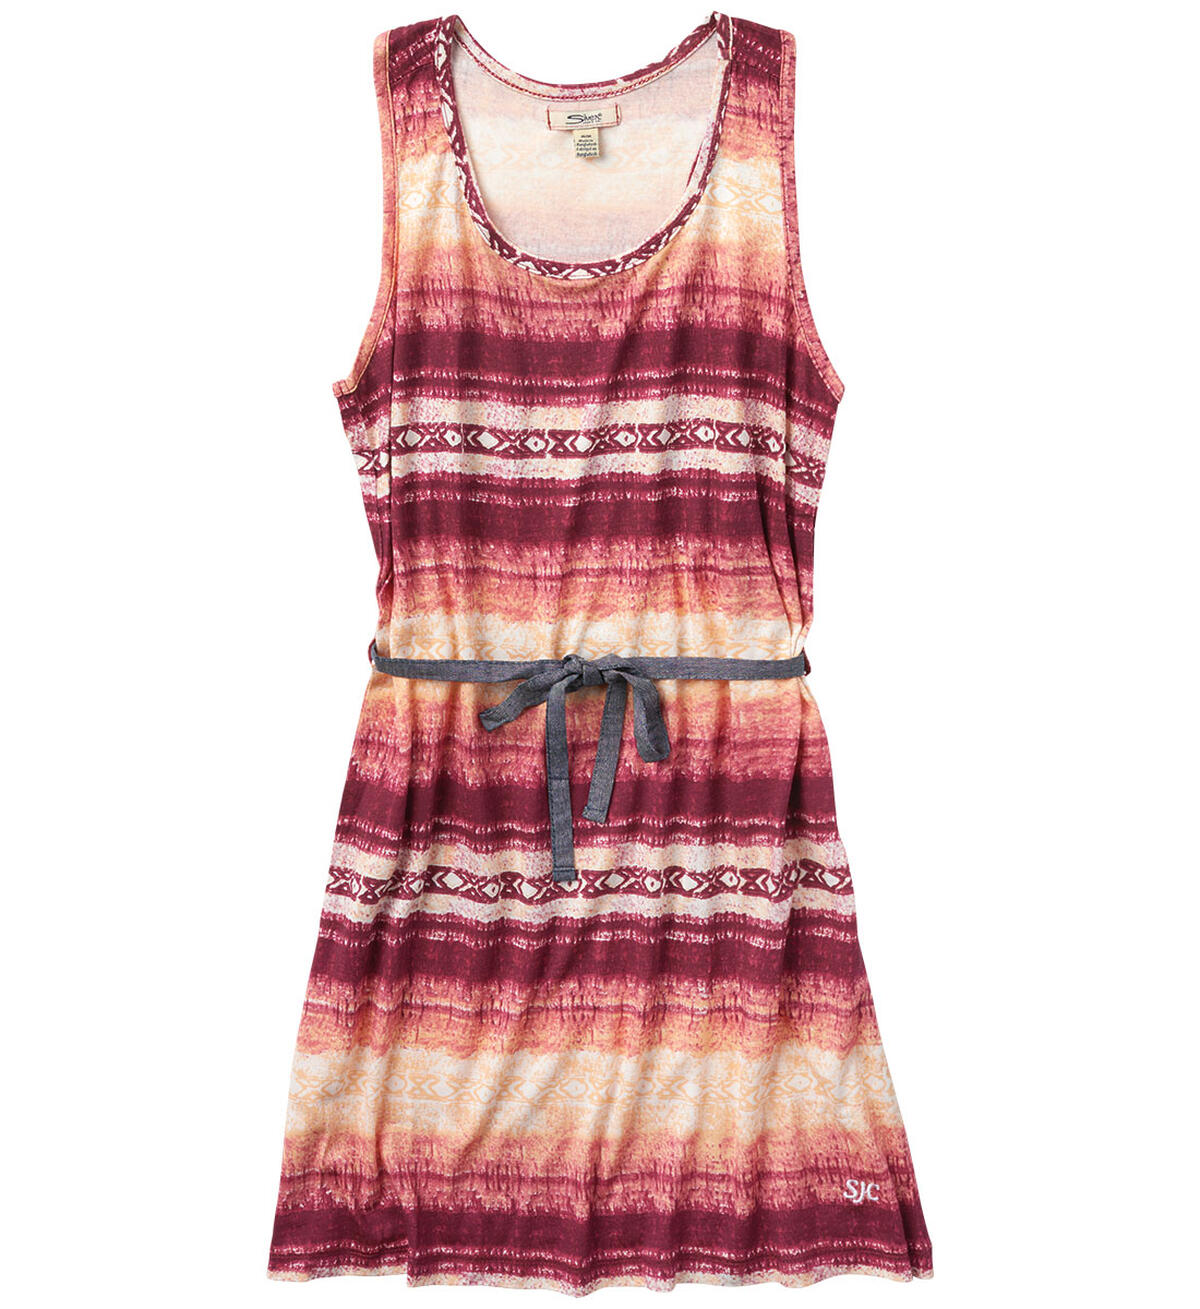 Sleeveless Tribal-Print Dress (4-7), , hi-res image number 0}